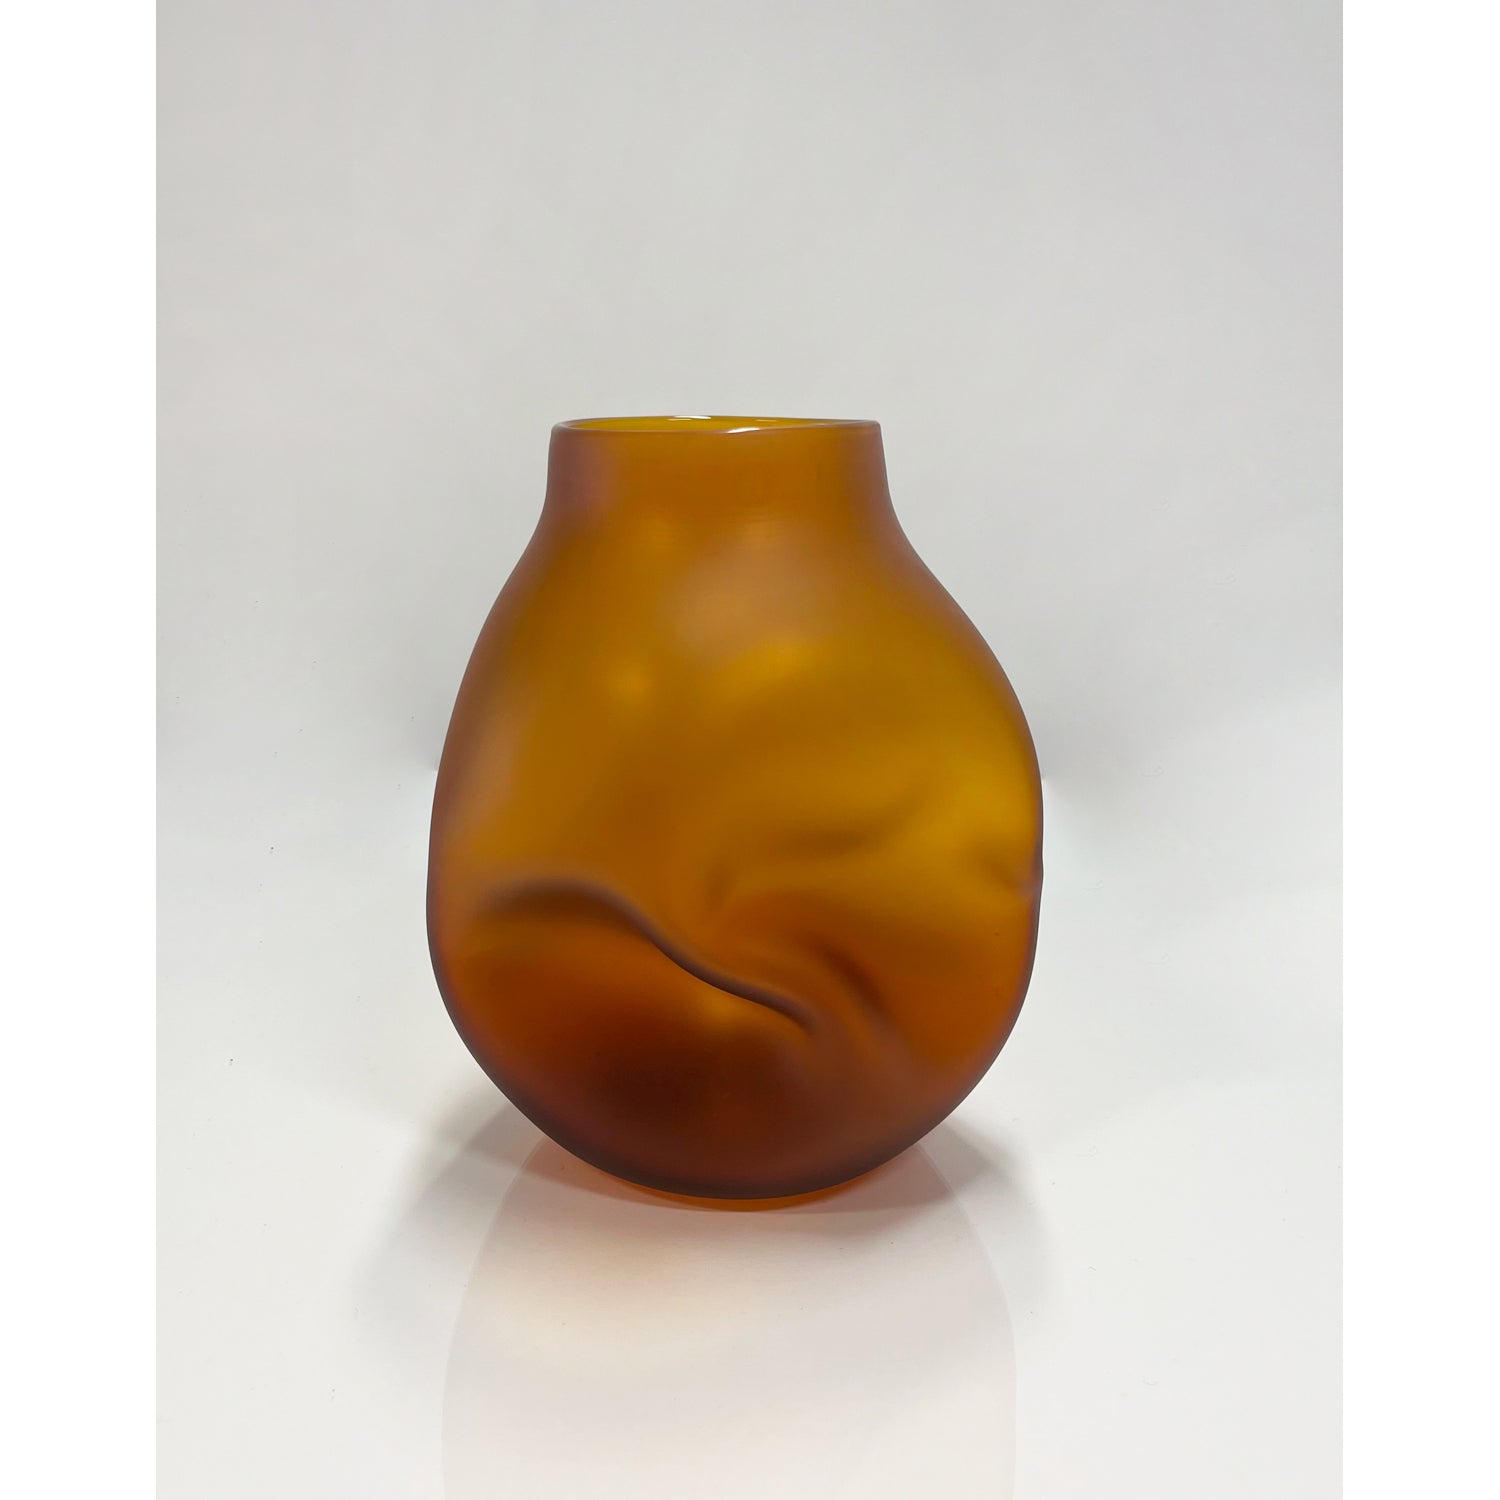 Goodbeast Design - Amber Boulder Vase, 7" x 5.5" x 5.5" 